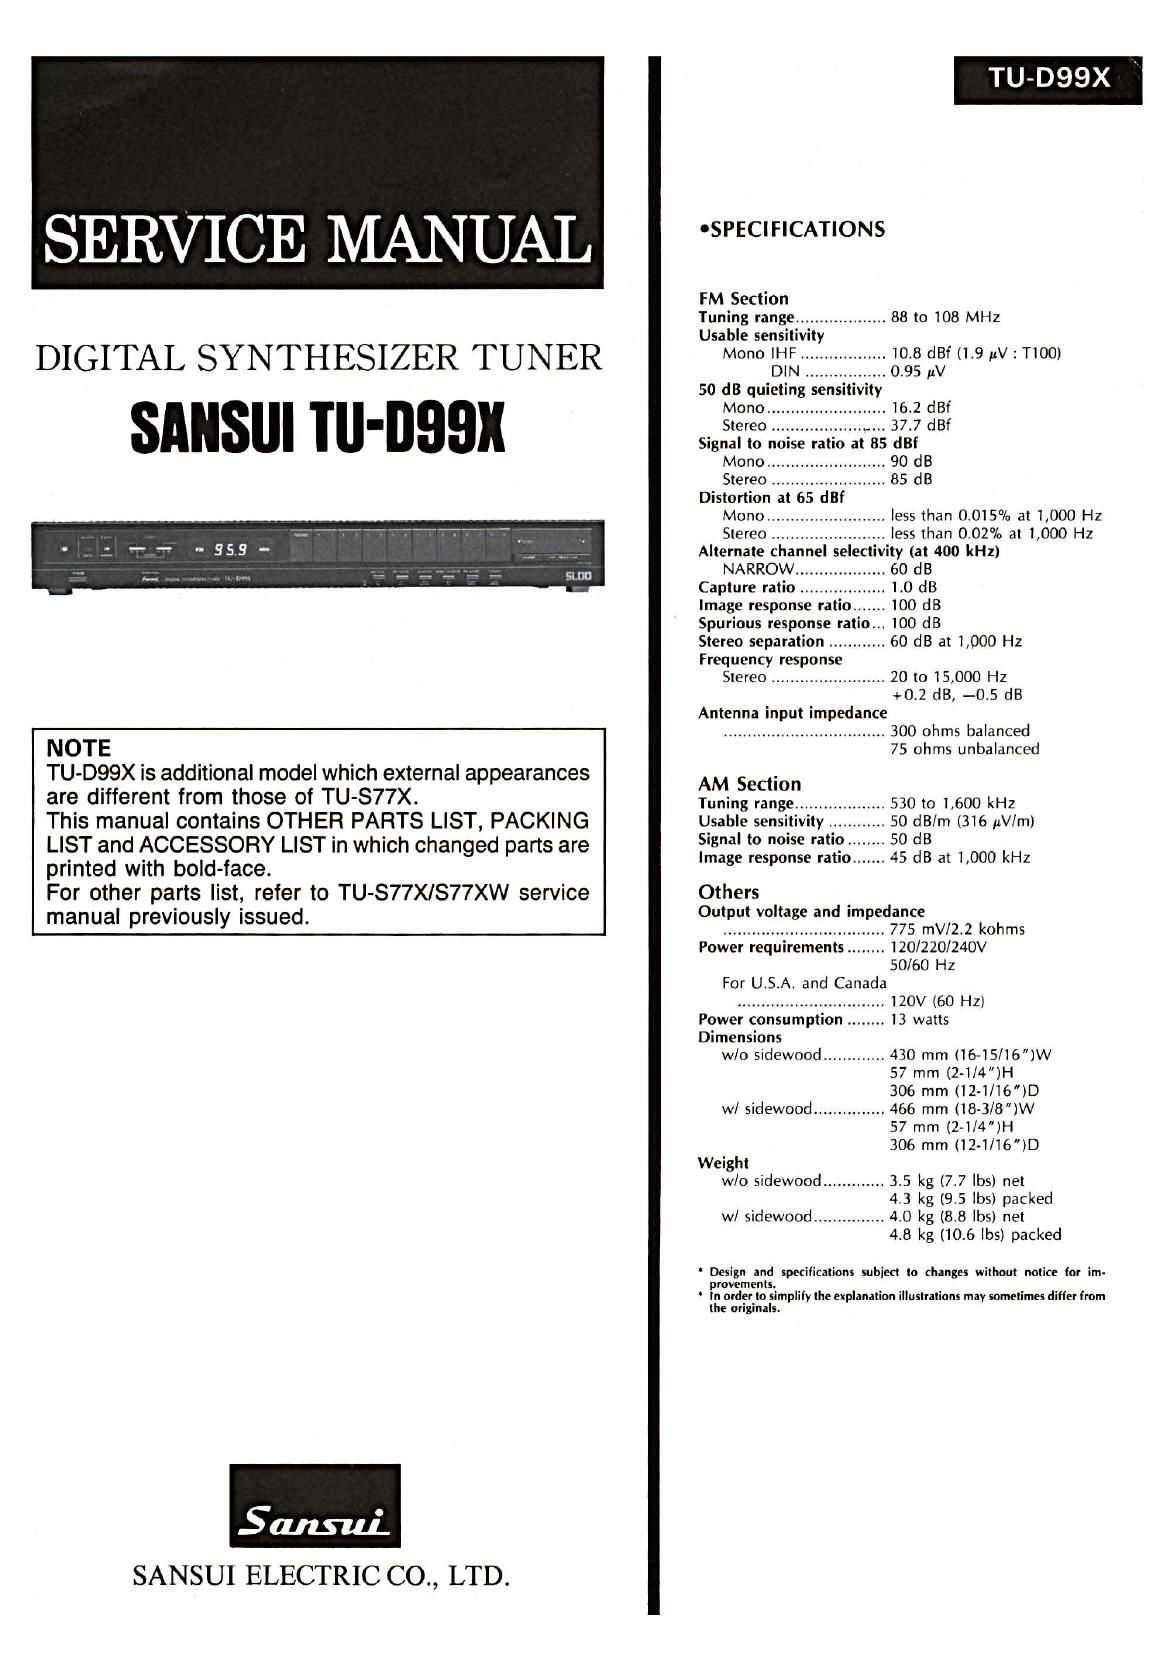 Sansui TU D99X Service Manual